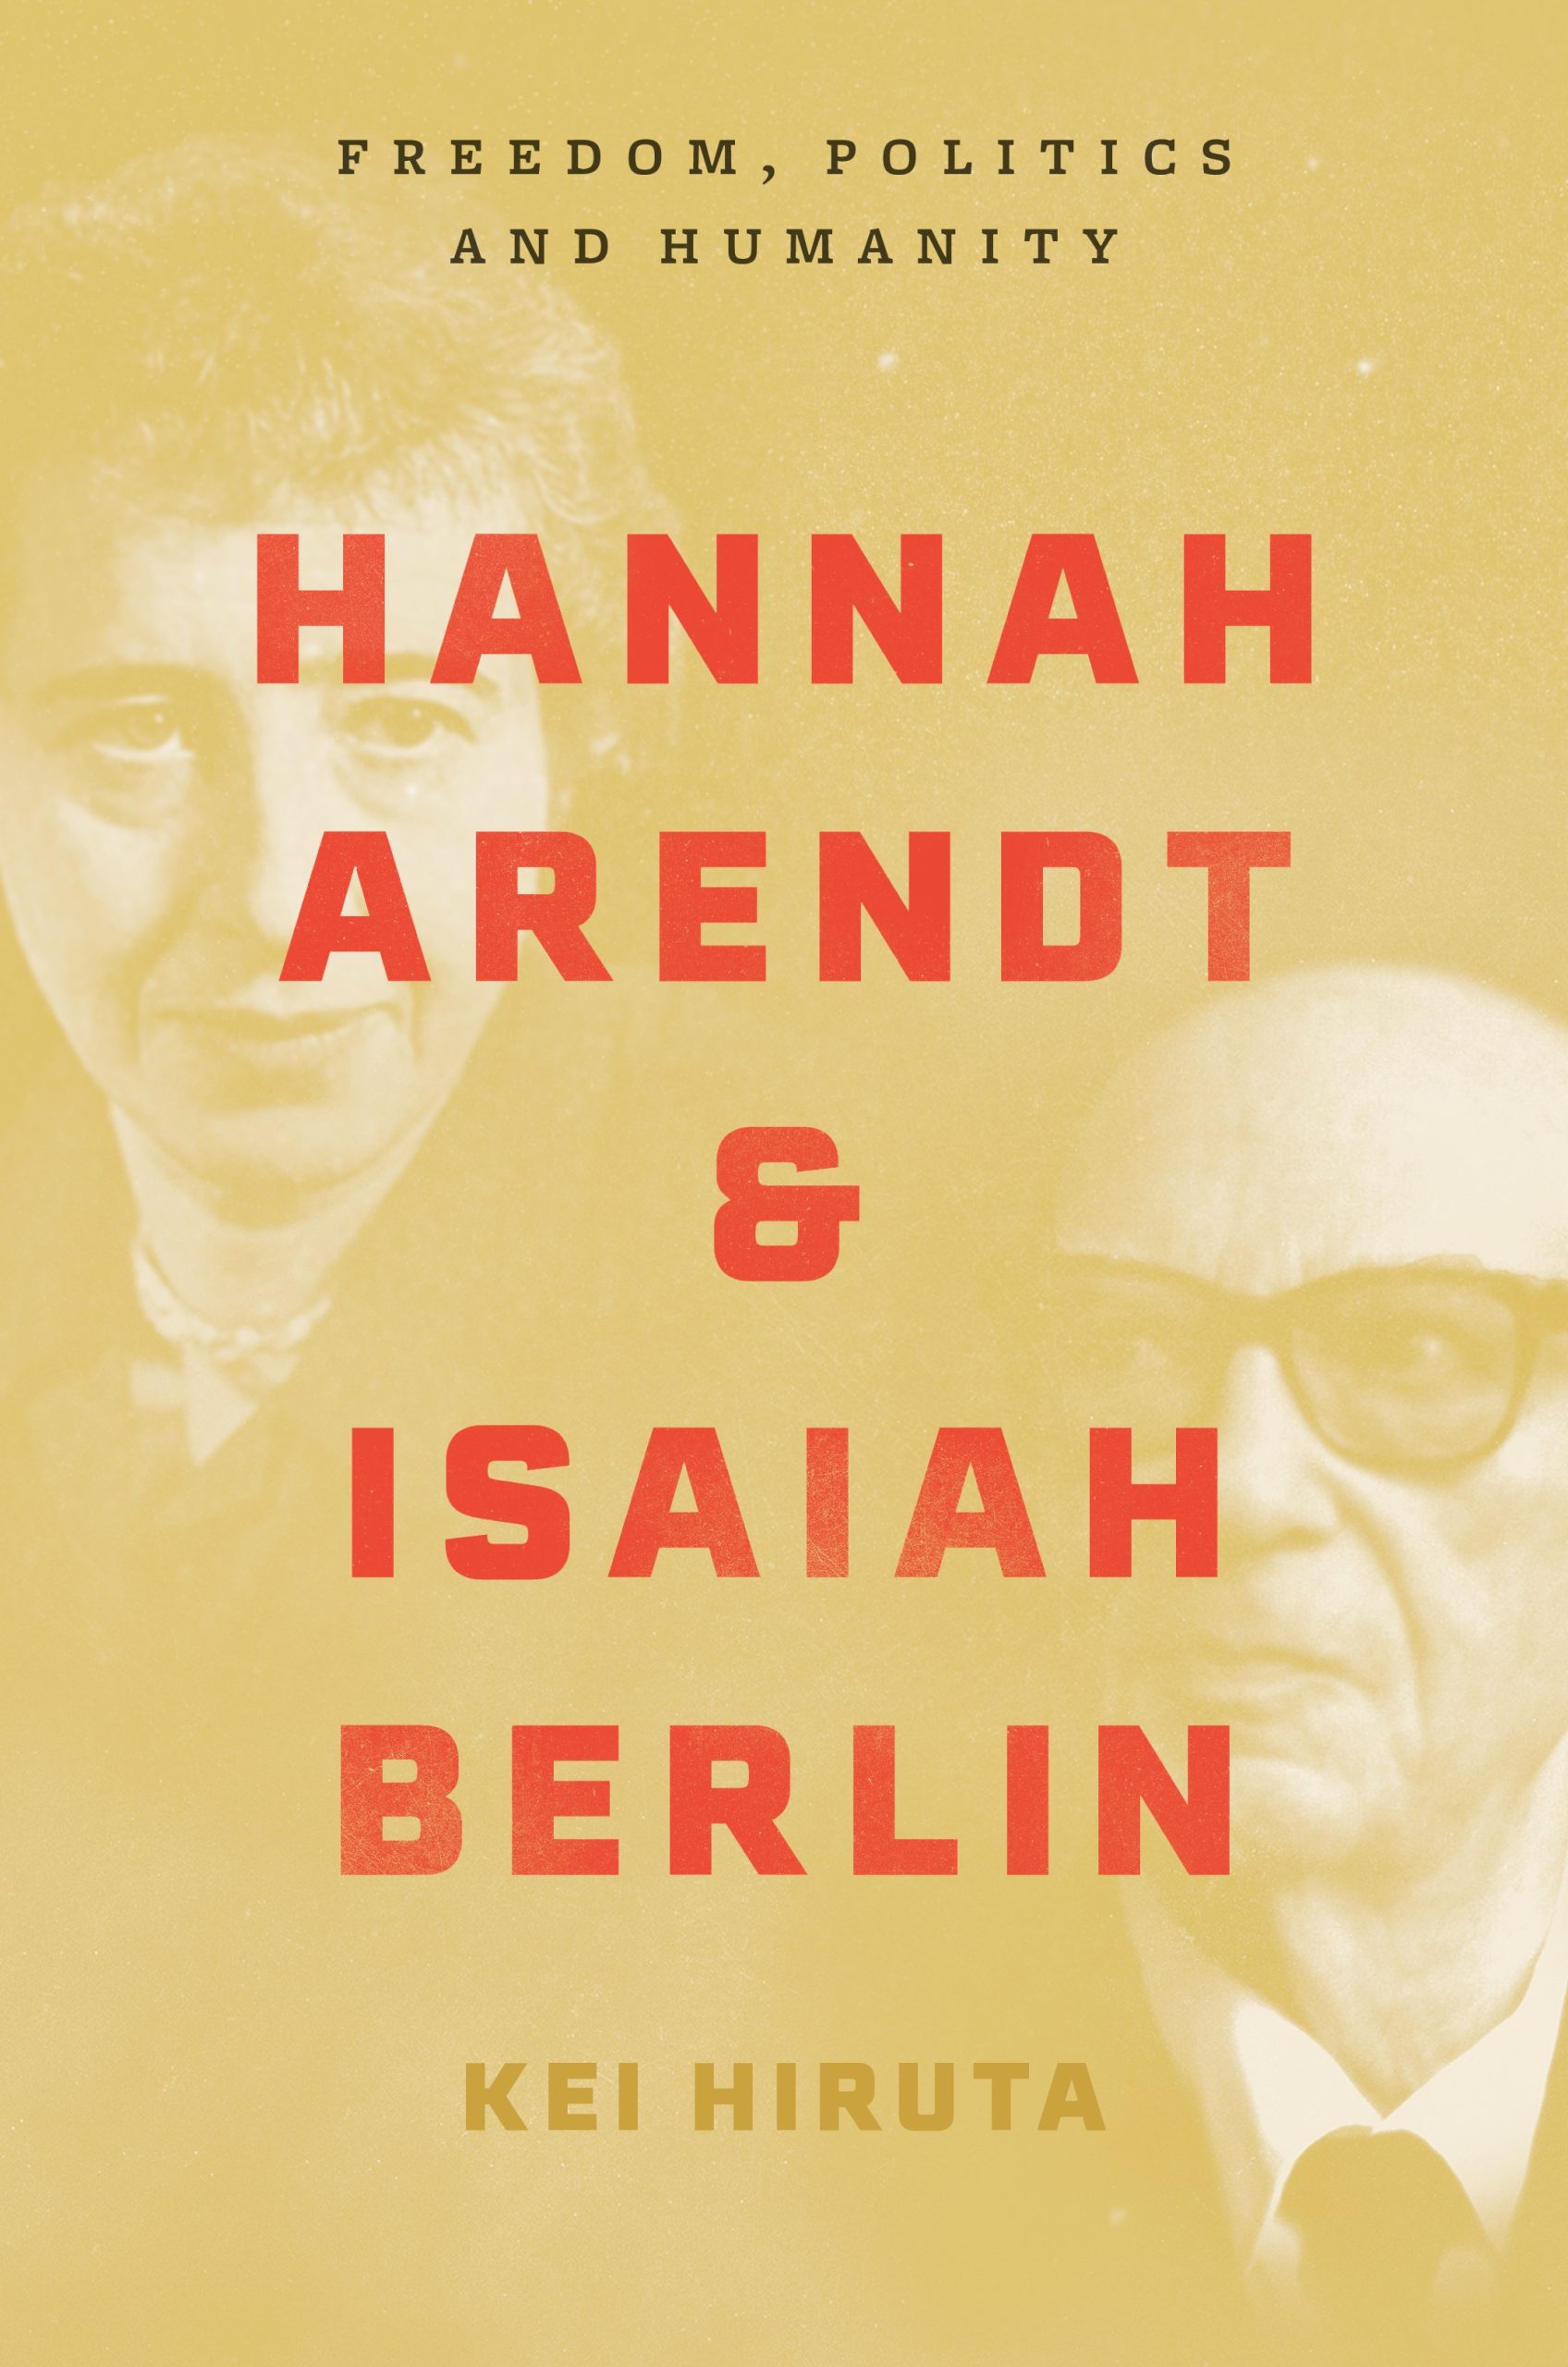 Kei Hiruta, Hannah Arendt and Isaiah Berlin: Freedom, Politics and Humanity (Princeton UP, 2021) 合評会